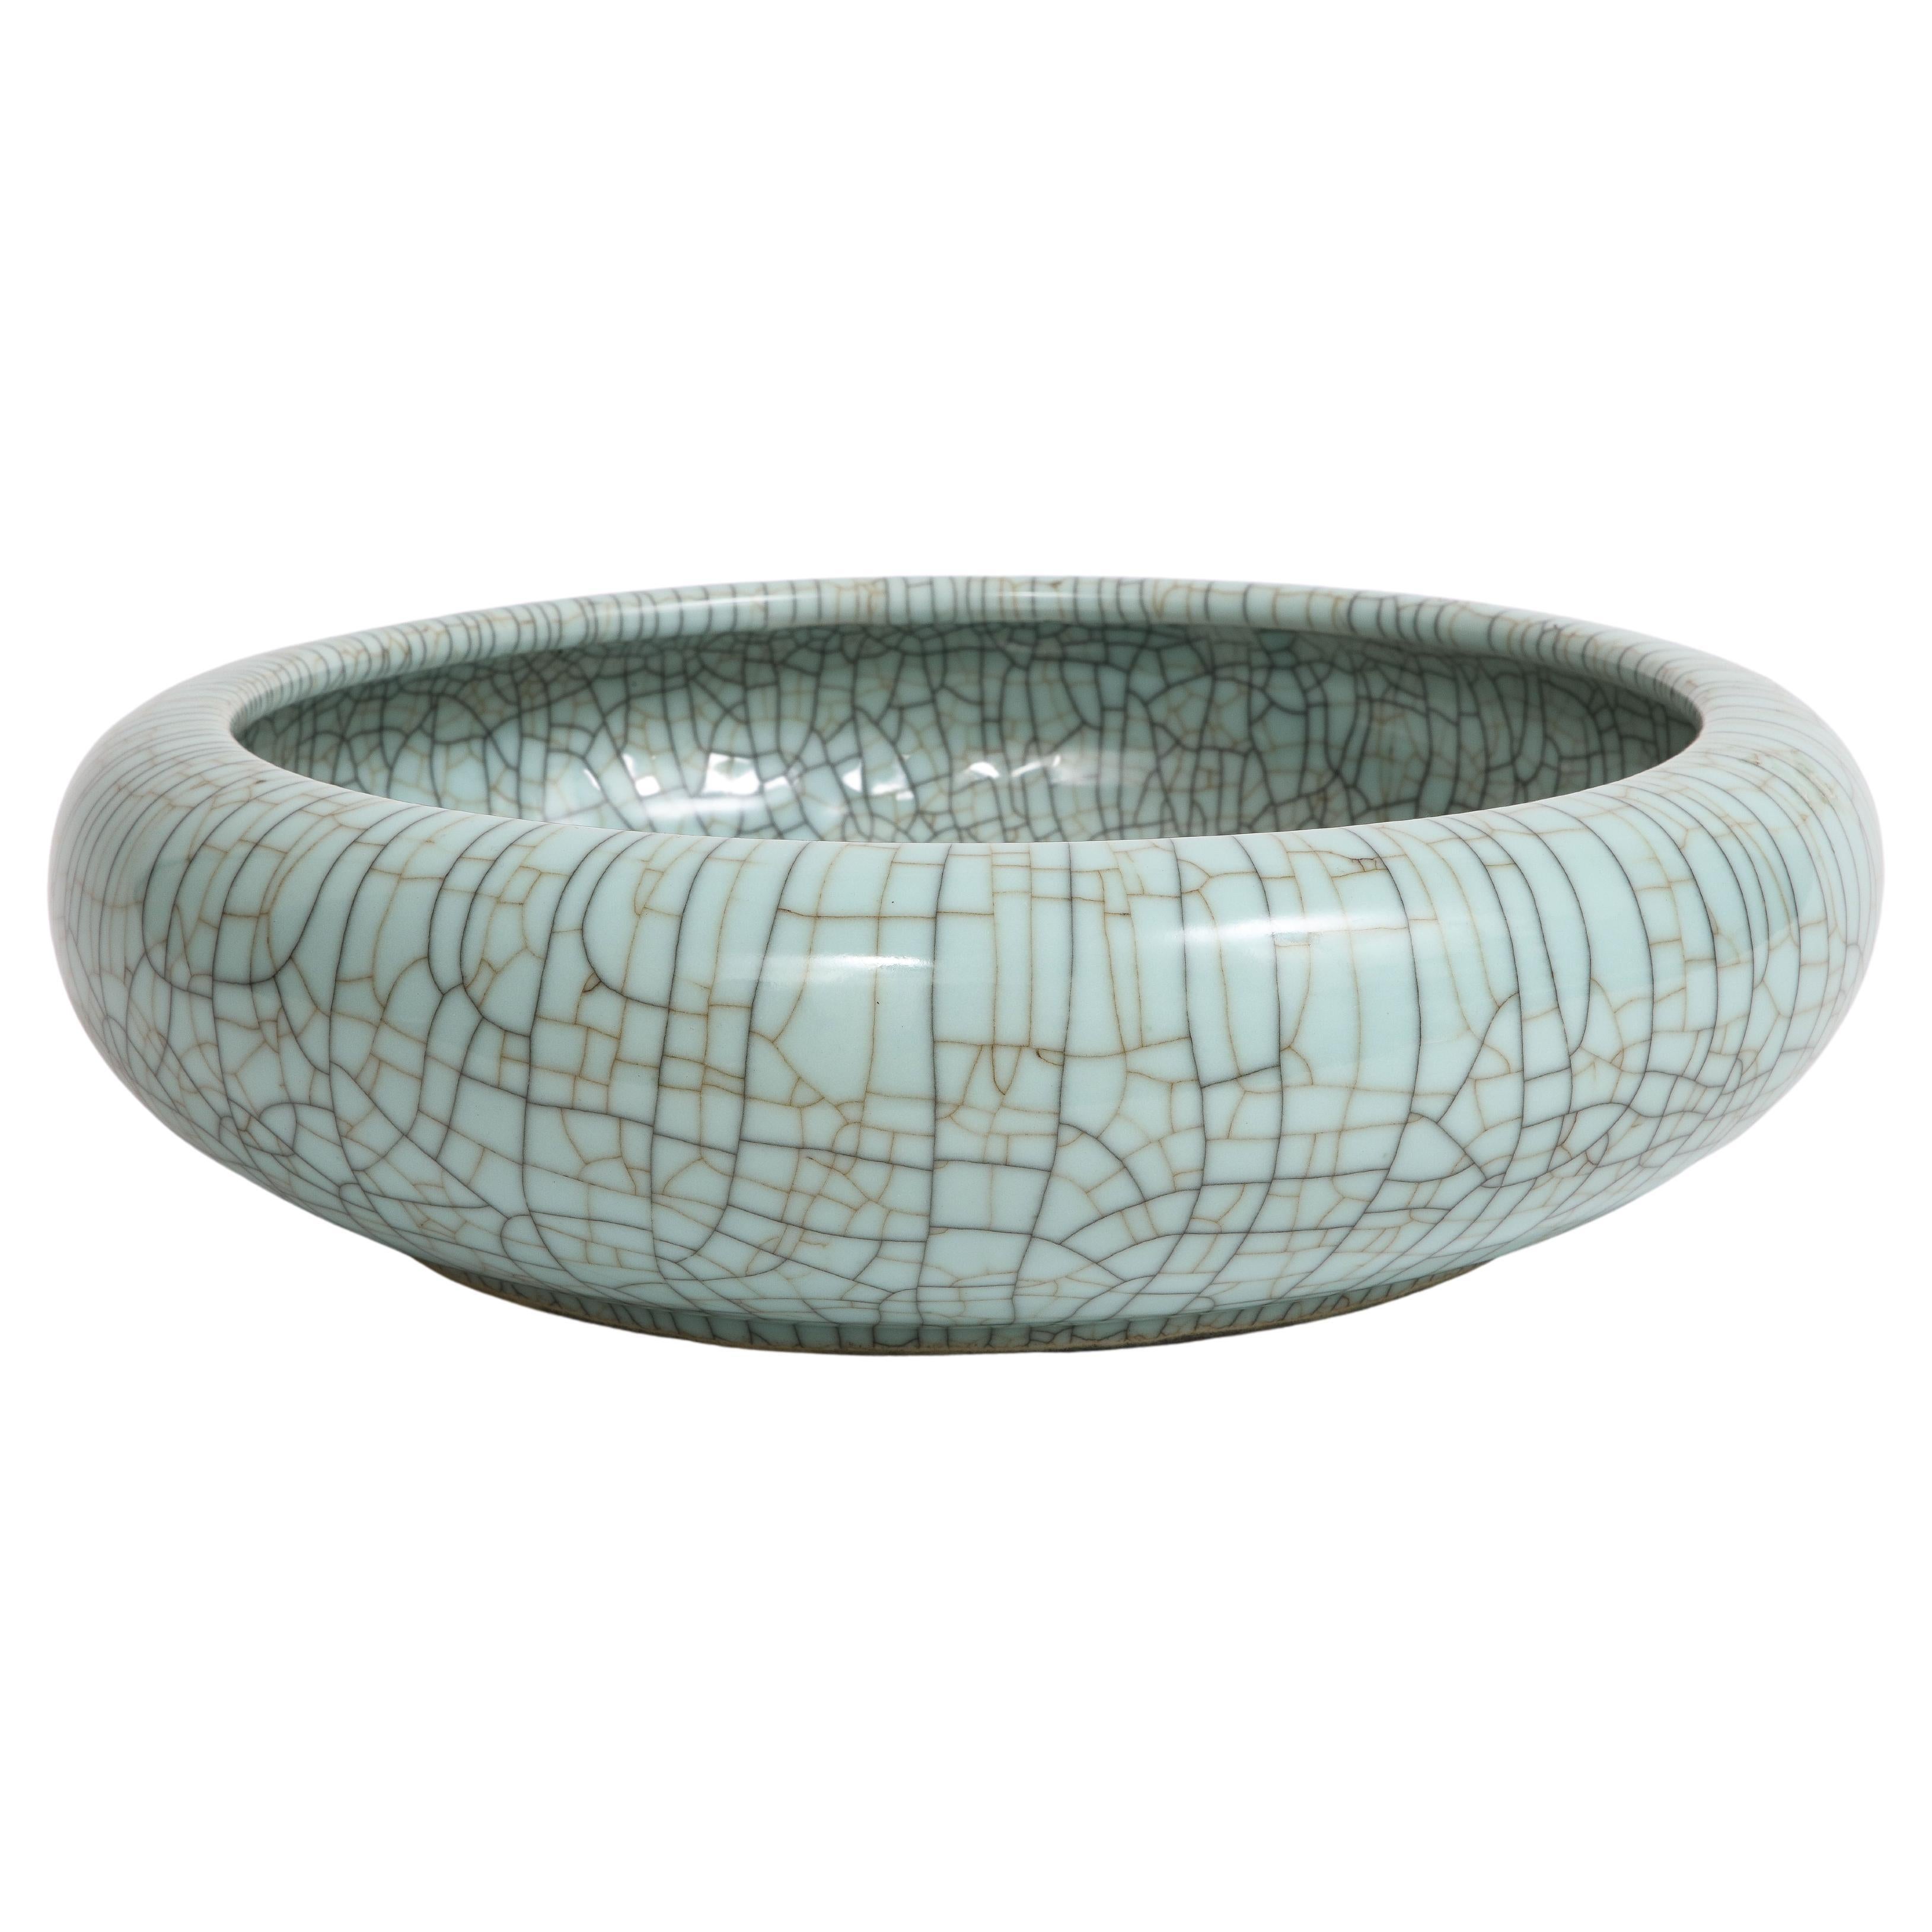 Chinese Celadon Crackle Porcelain Bowl / Centerpiece For Sale